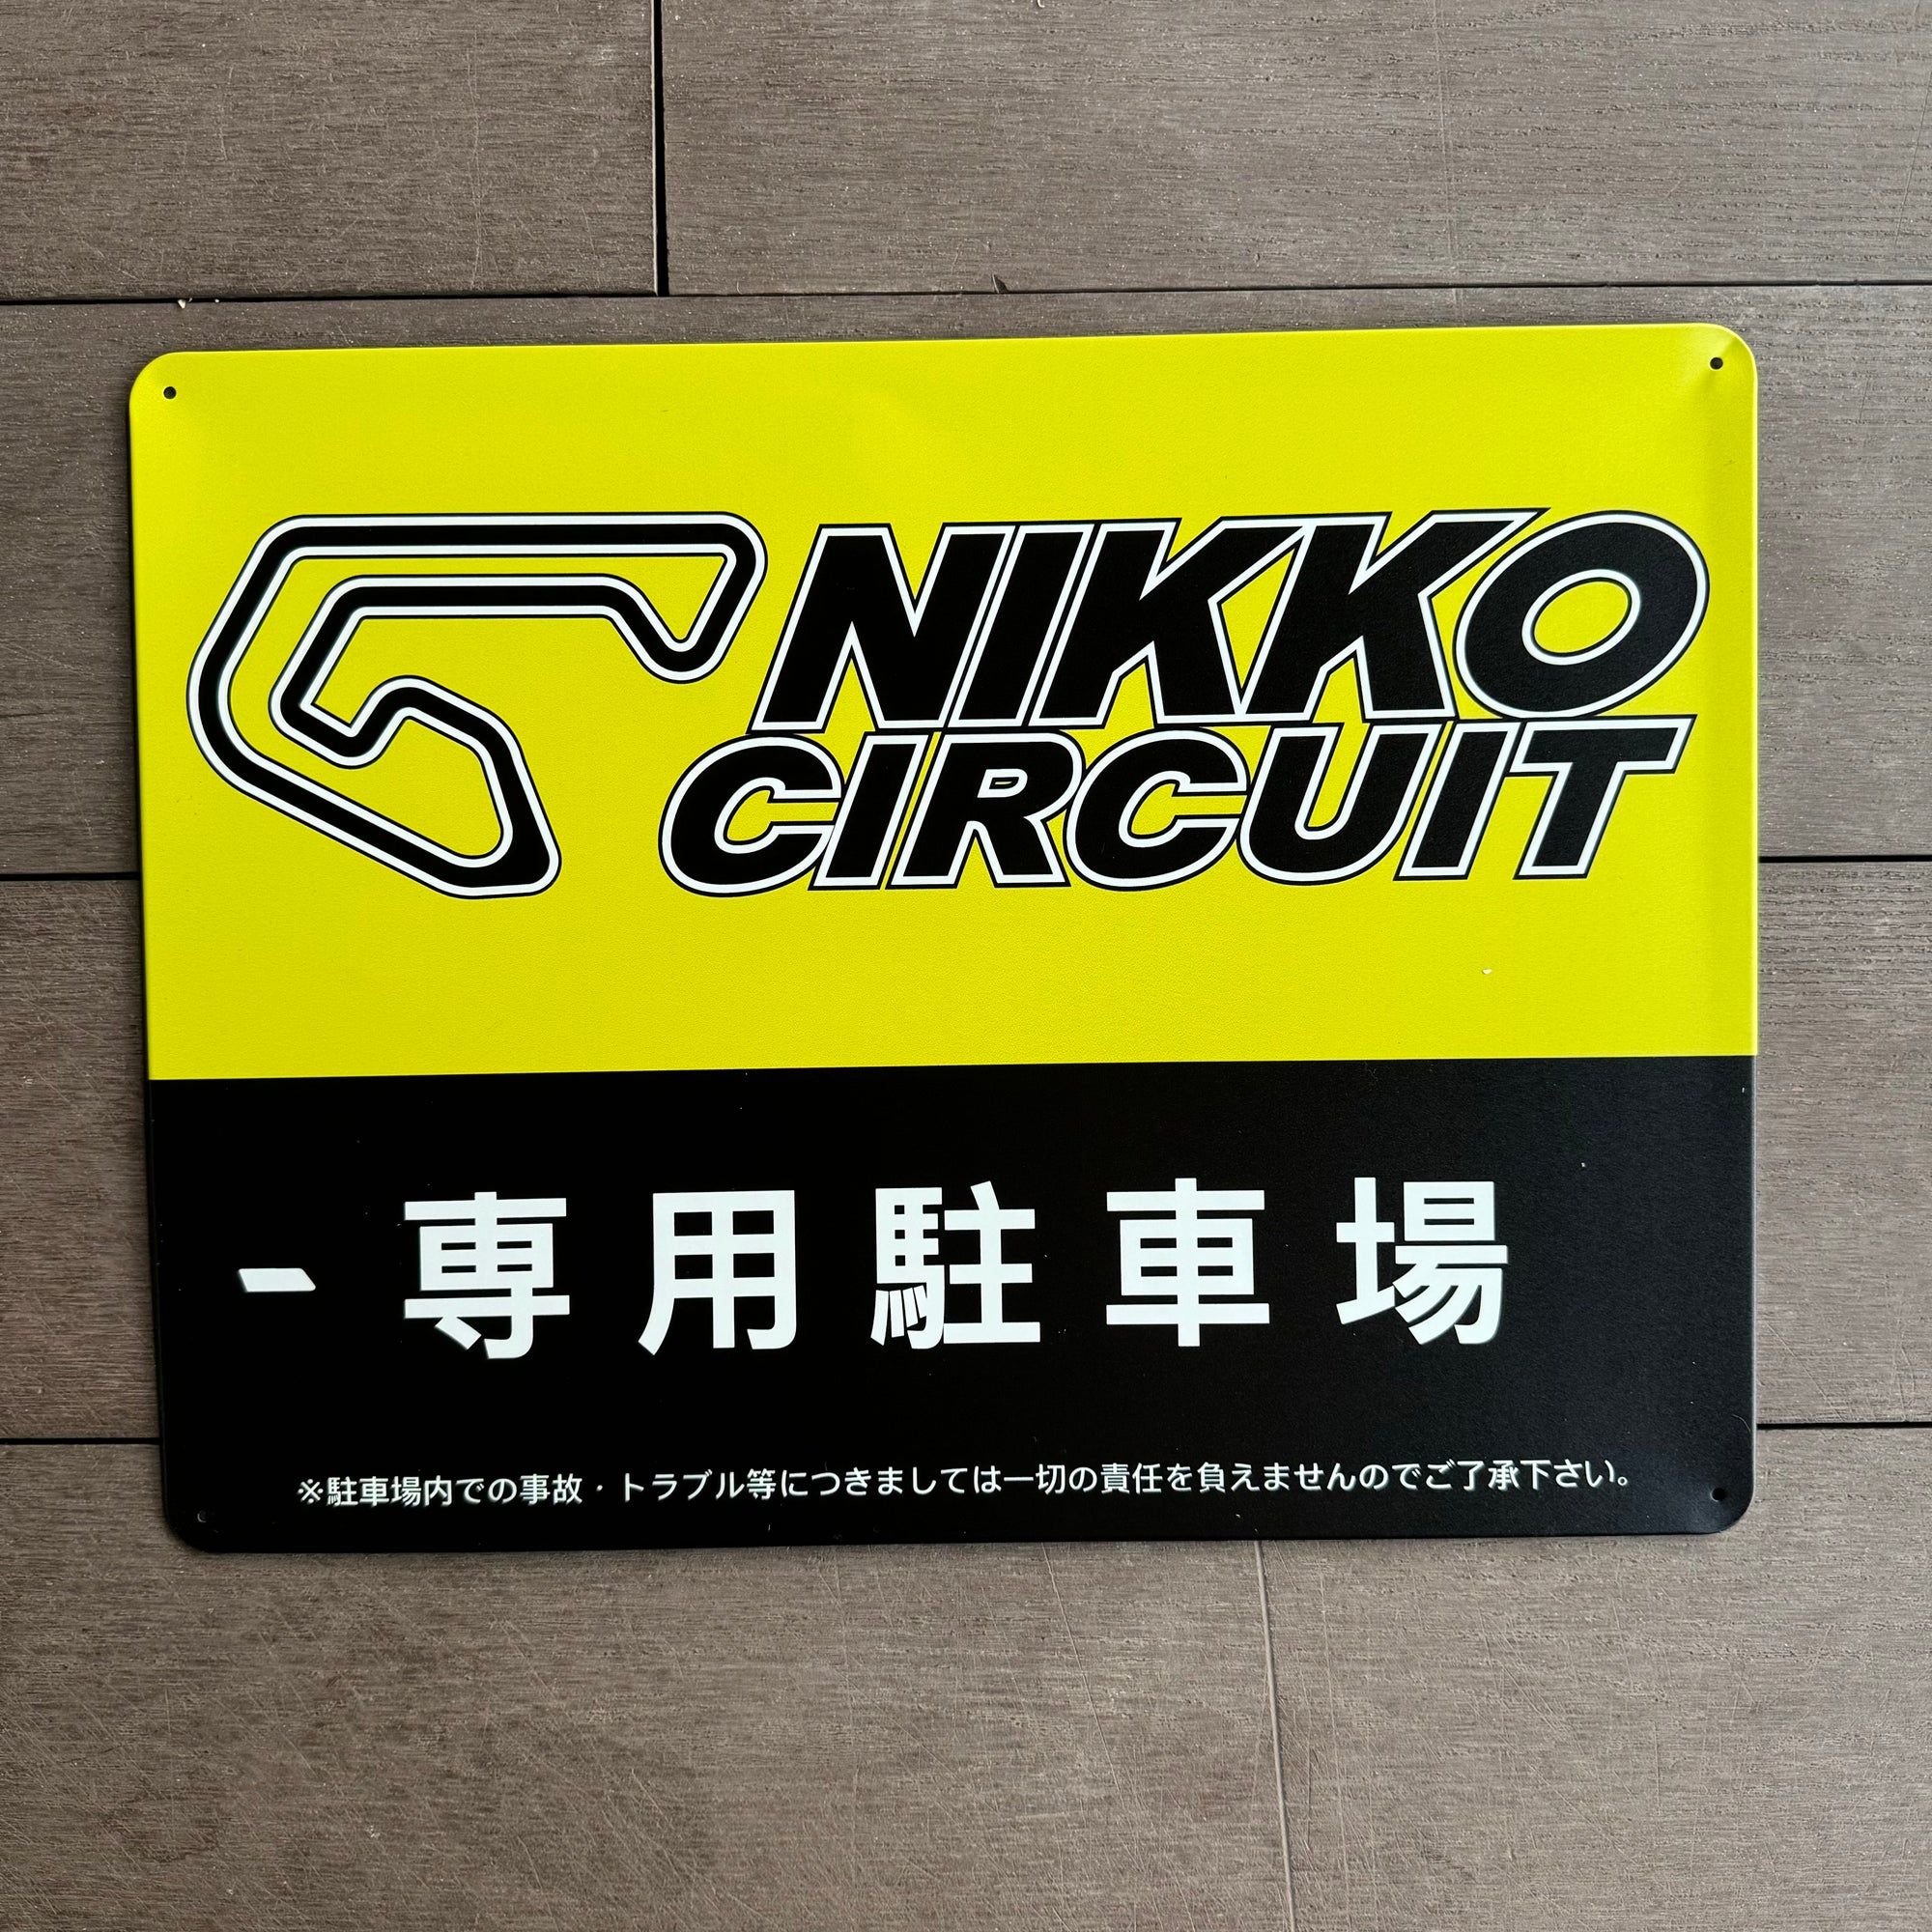 Nikko Circuit Metal Sign